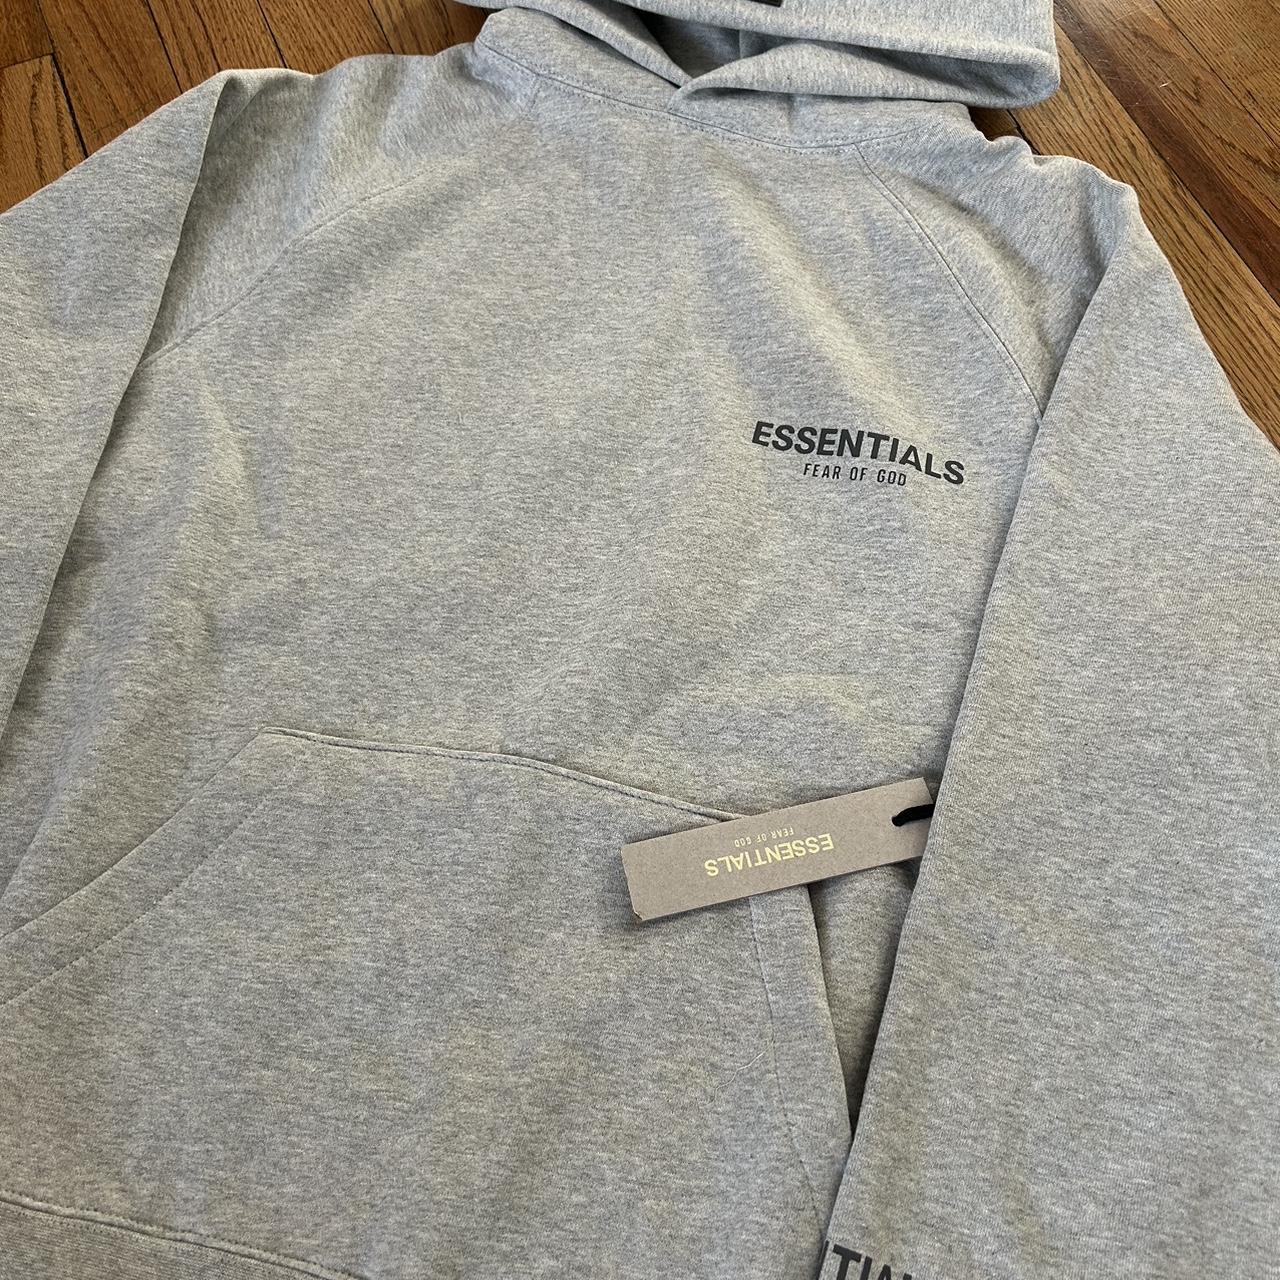 Essentials hoodie dark gray - Depop